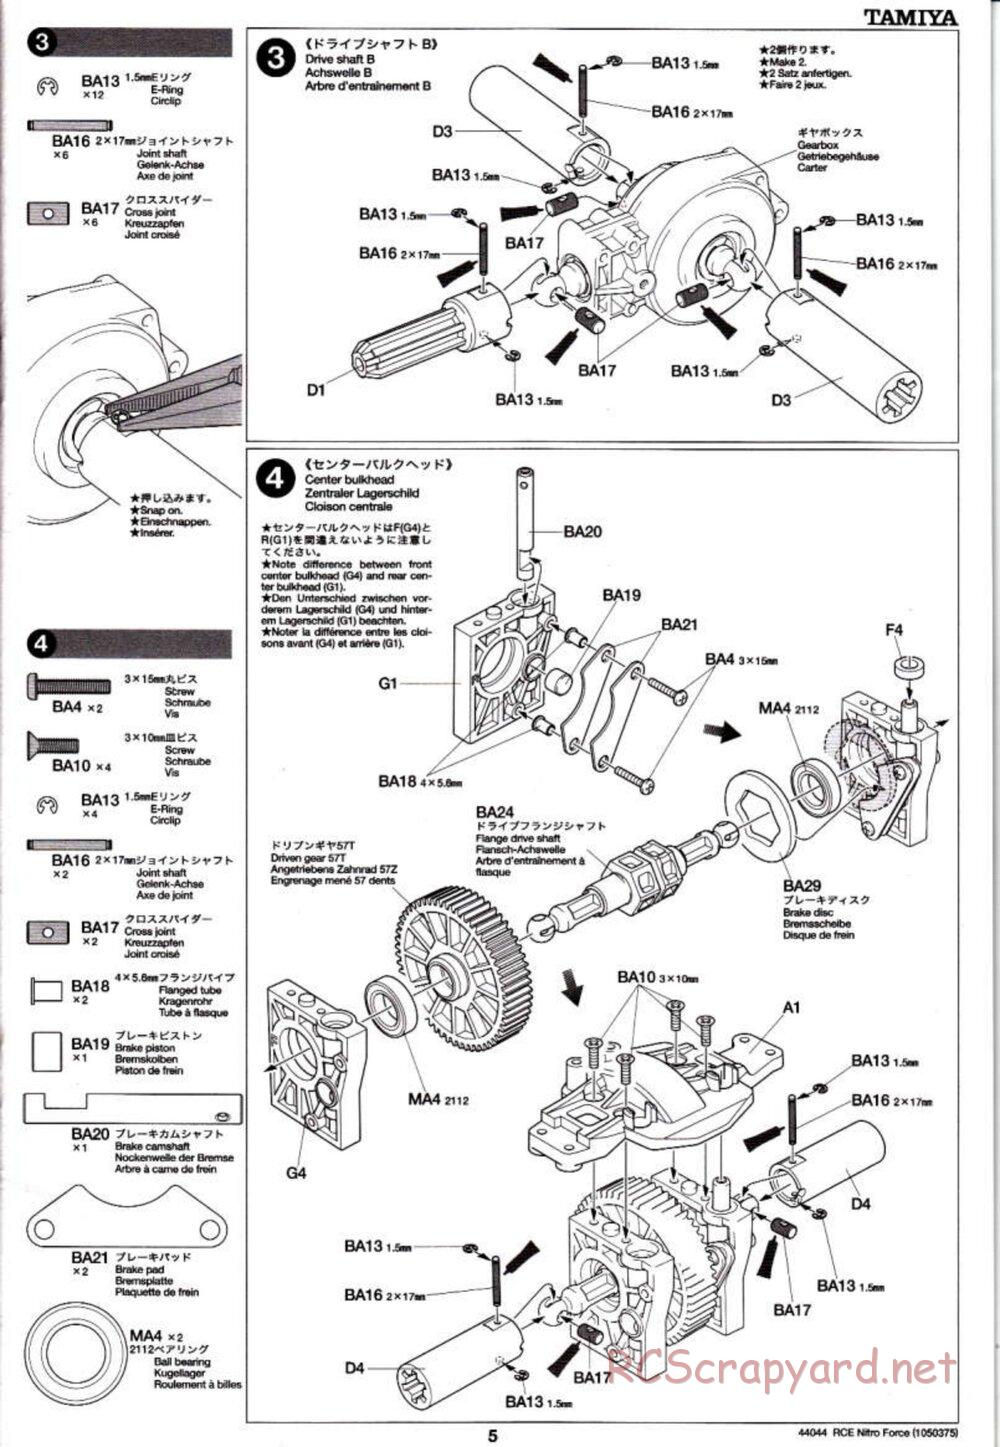 Tamiya - Nitro Force - NDF-01 Chassis - Manual - Page 5